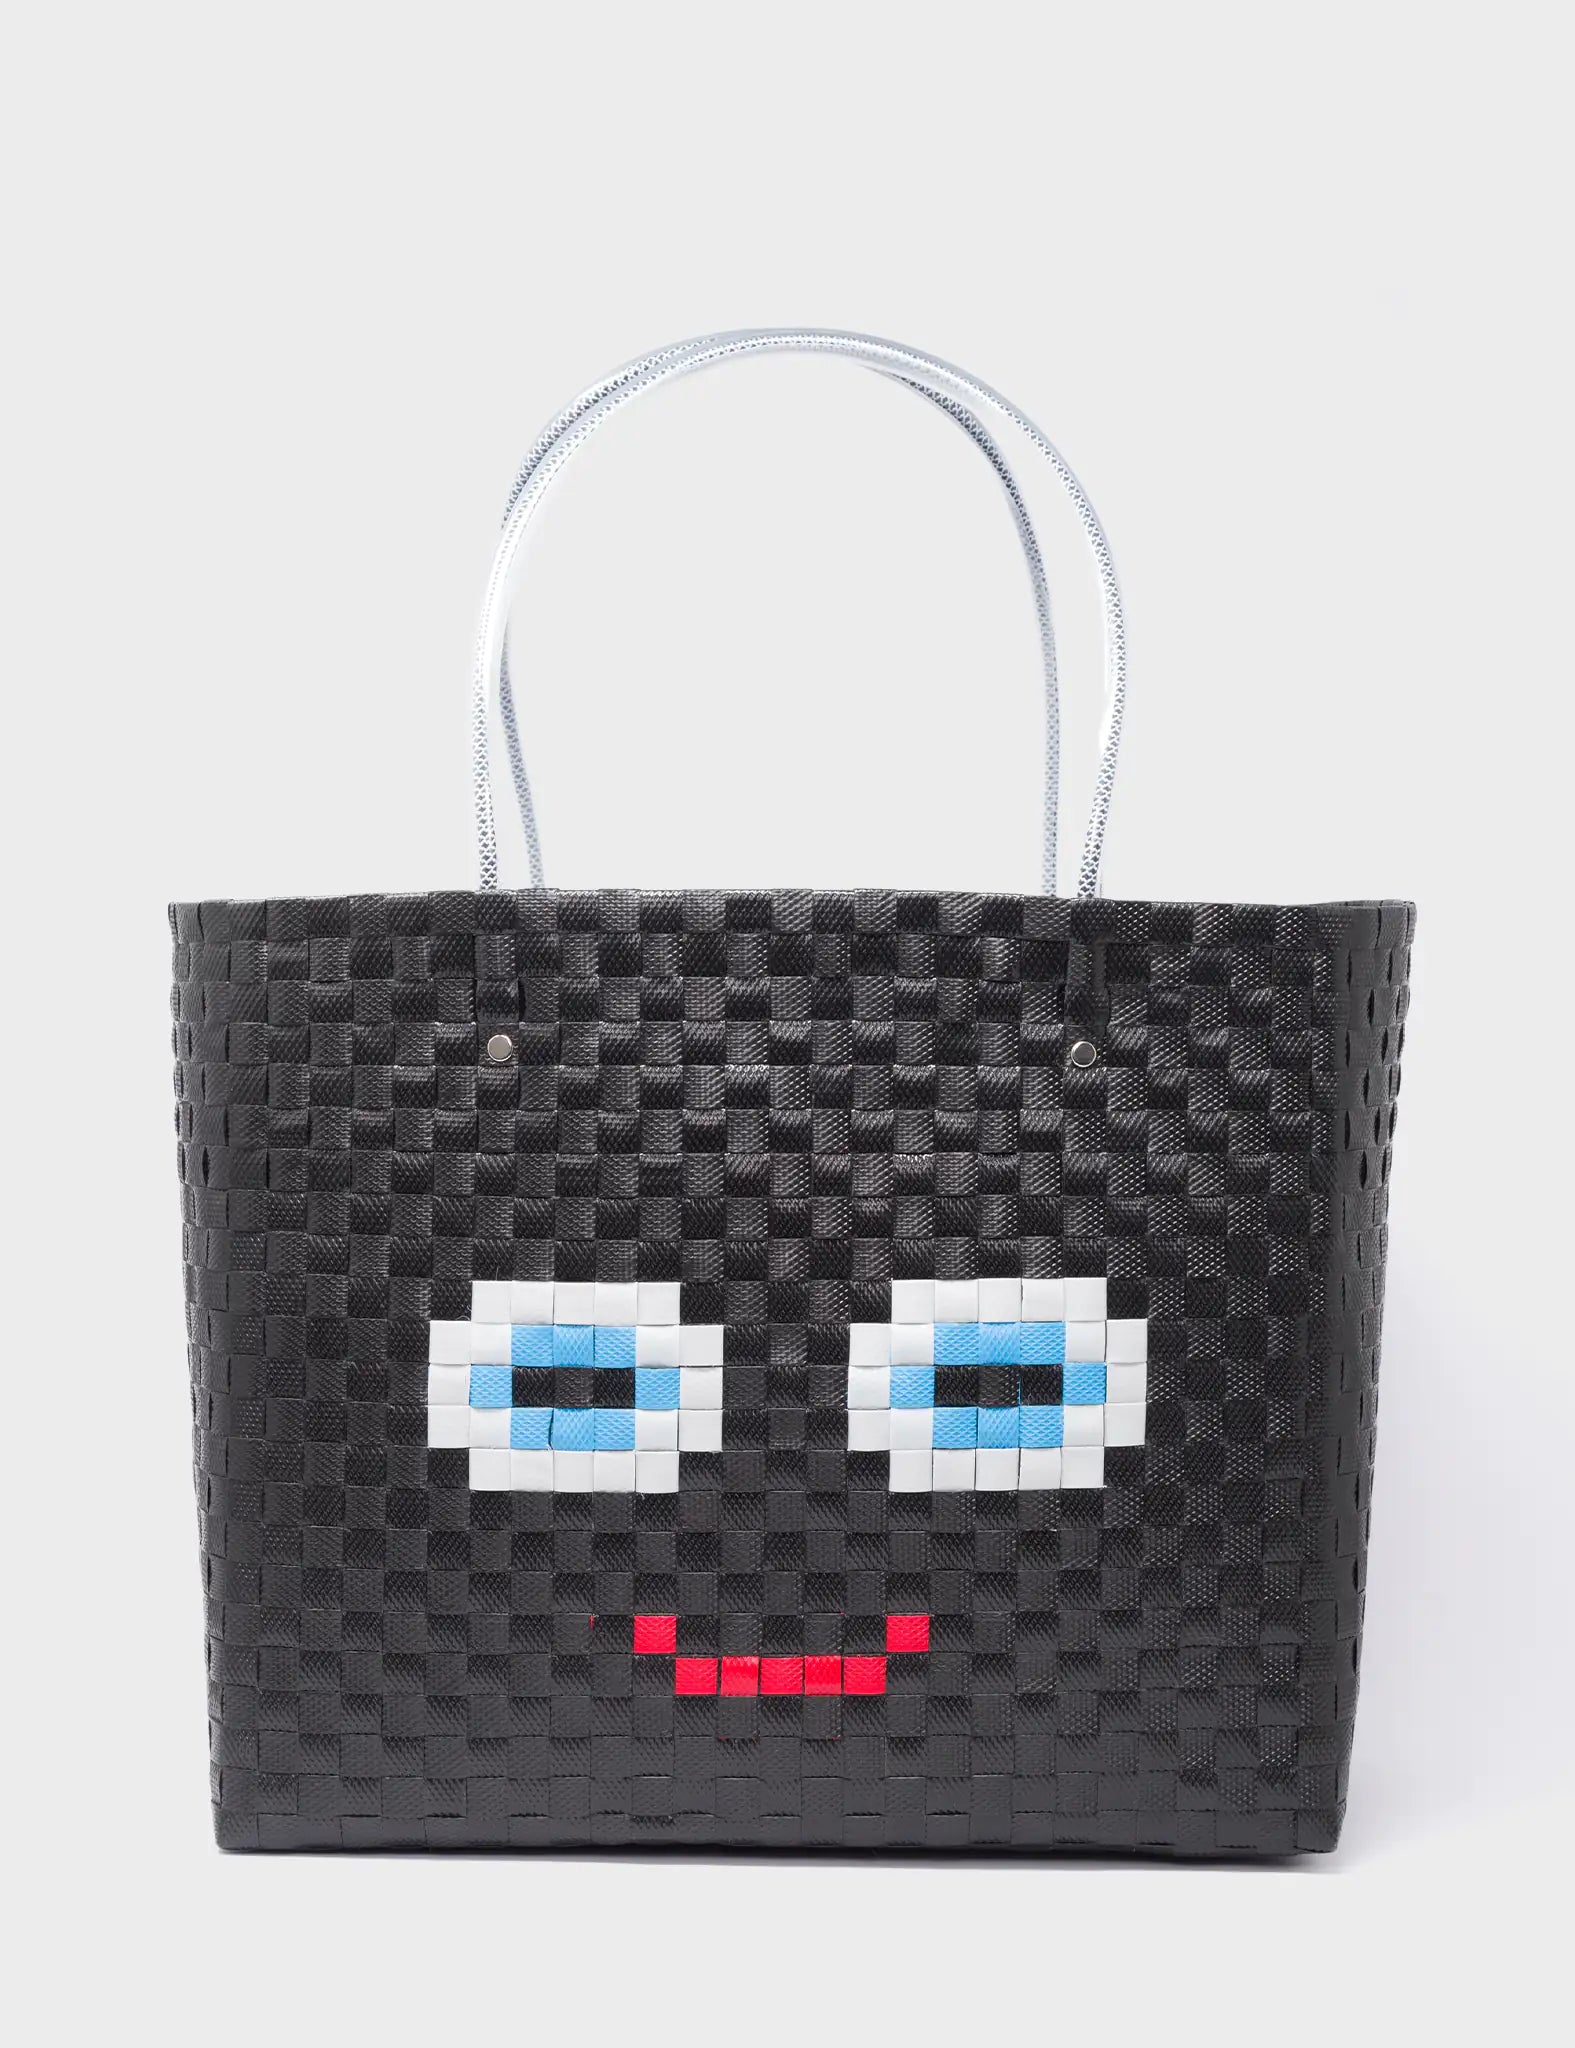 Large Black Handwoven Market Bag - Happy Face - Front View